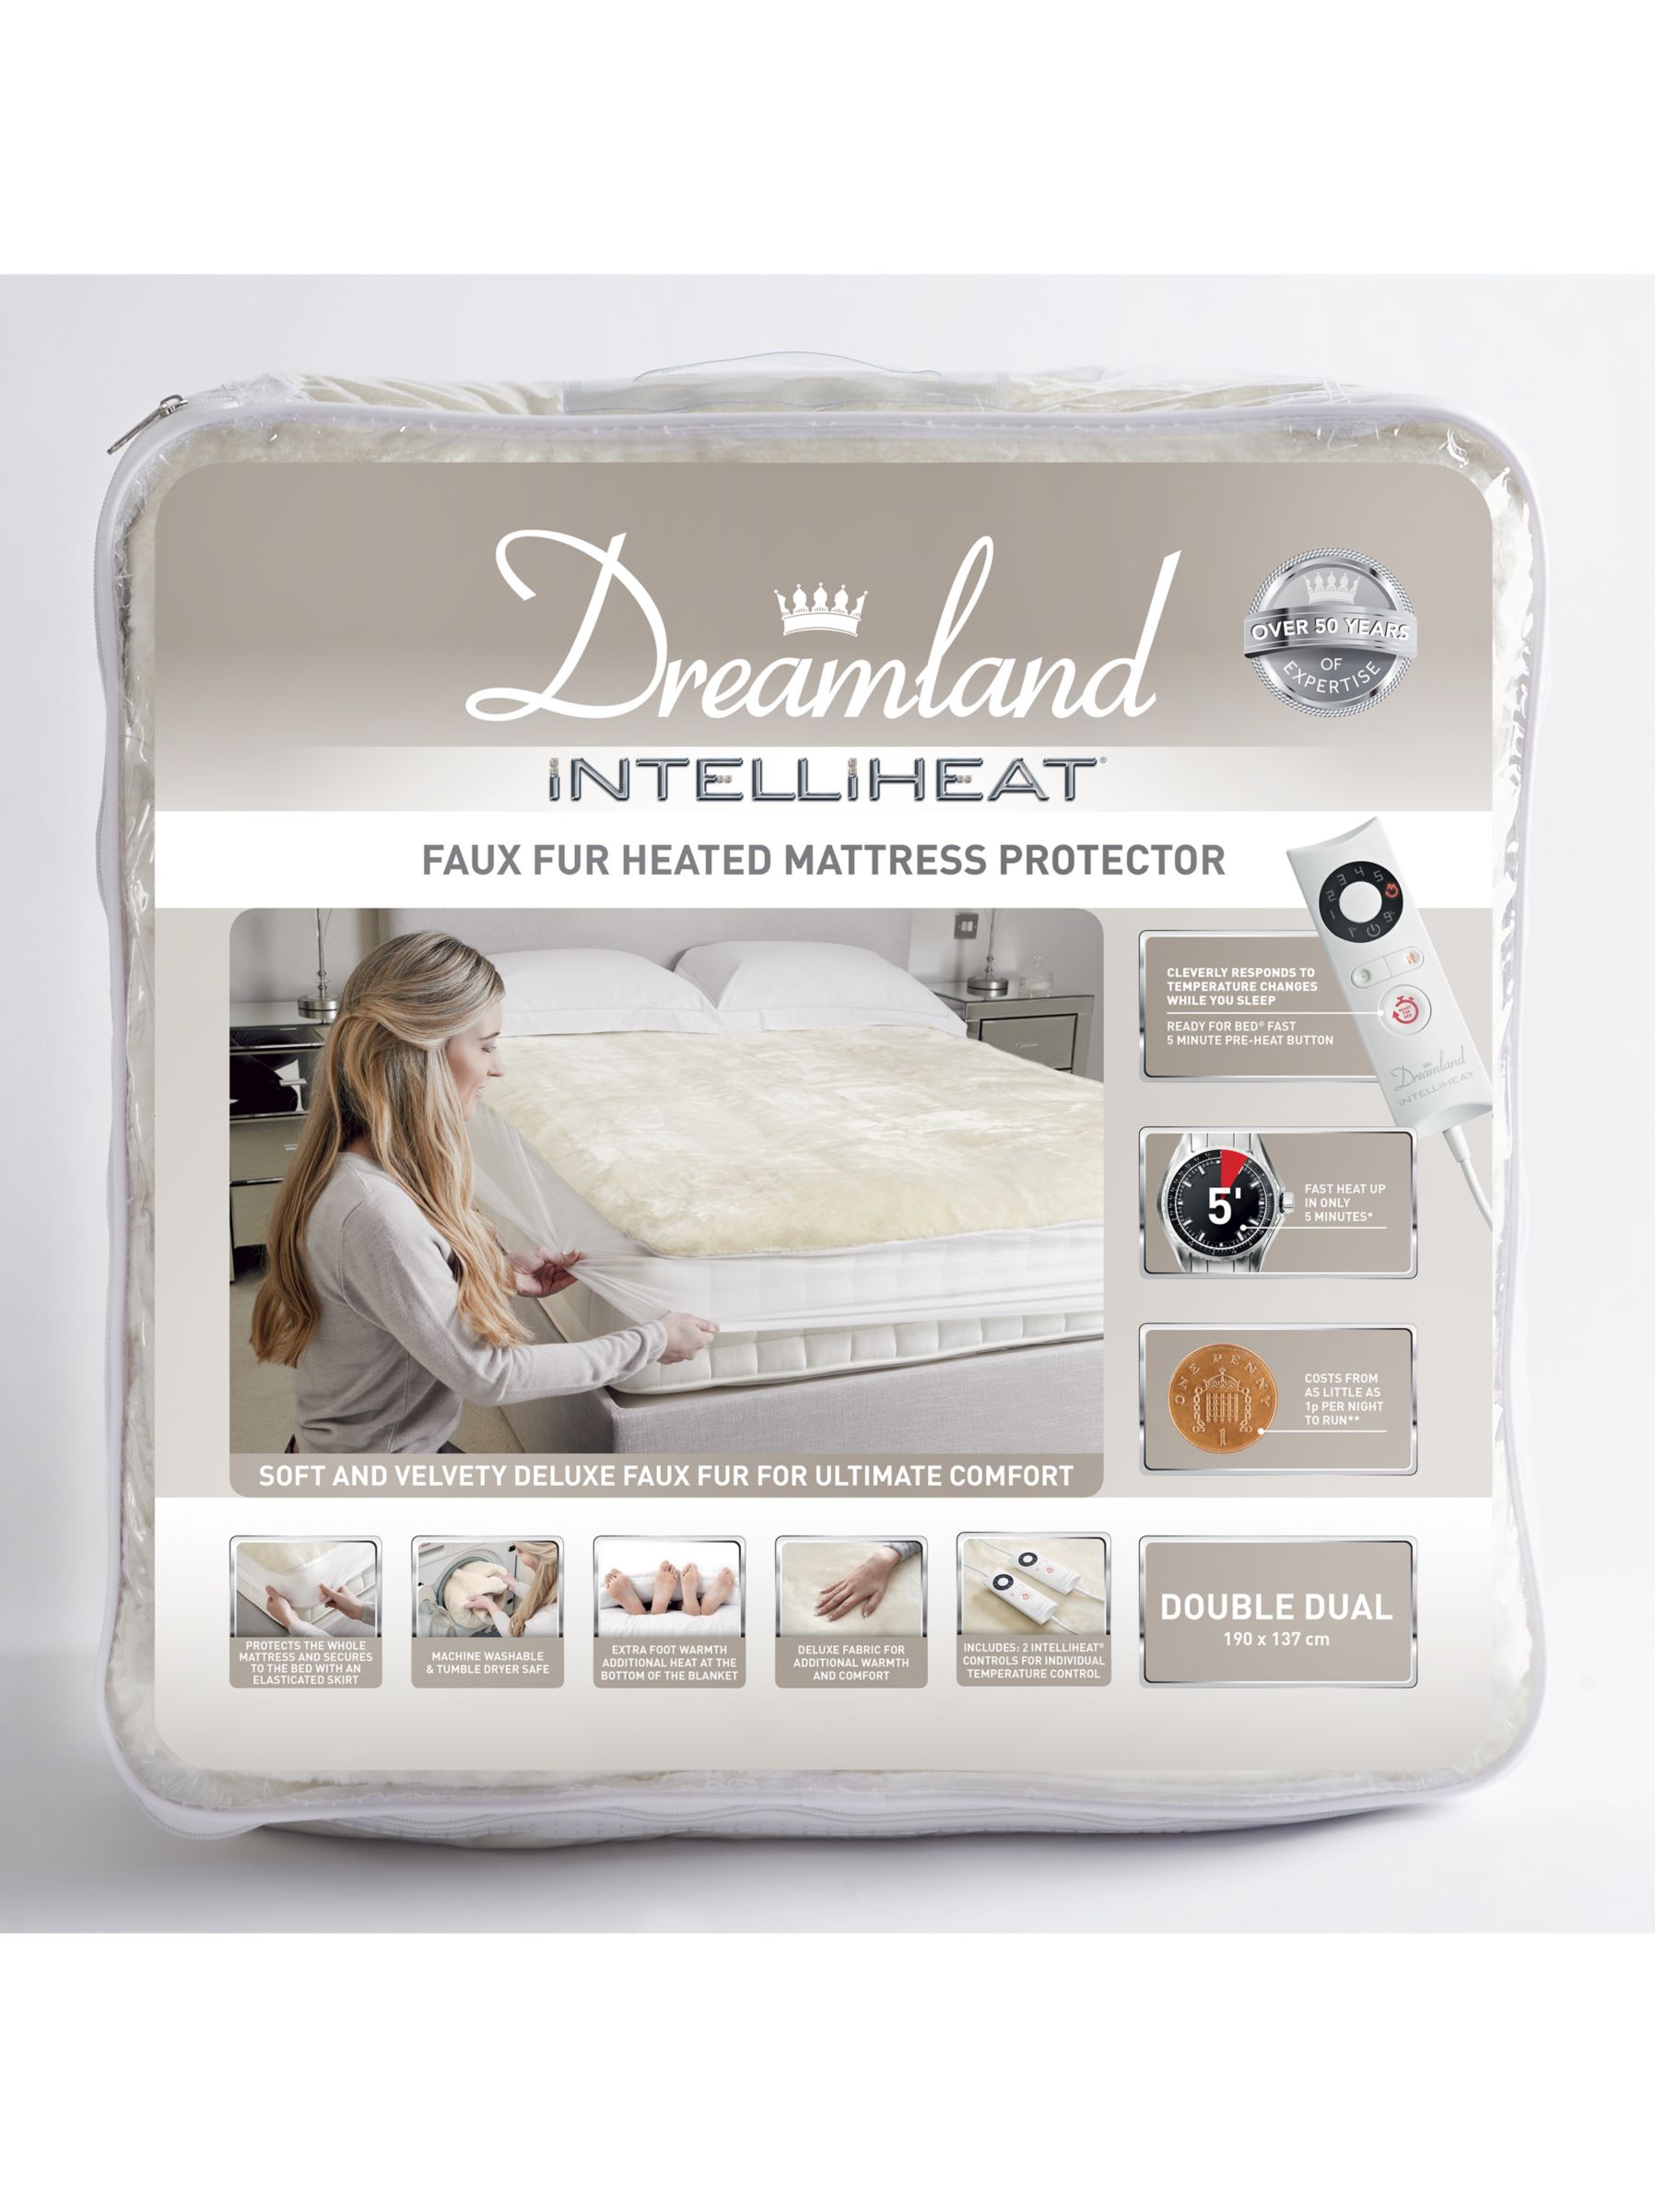 Dreamland Dual Control Intelliheat Faux Fur Heated Mattress Protector ...